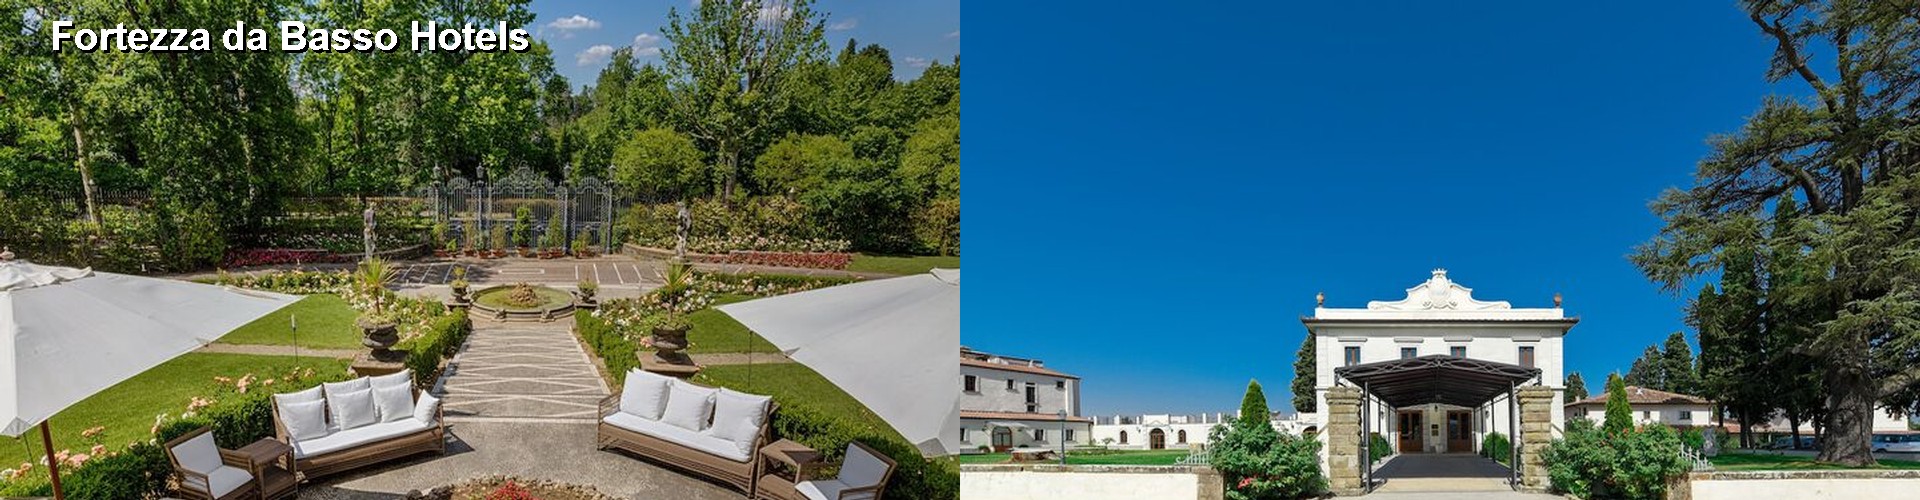 5 Best Hotels near Fortezza da Basso